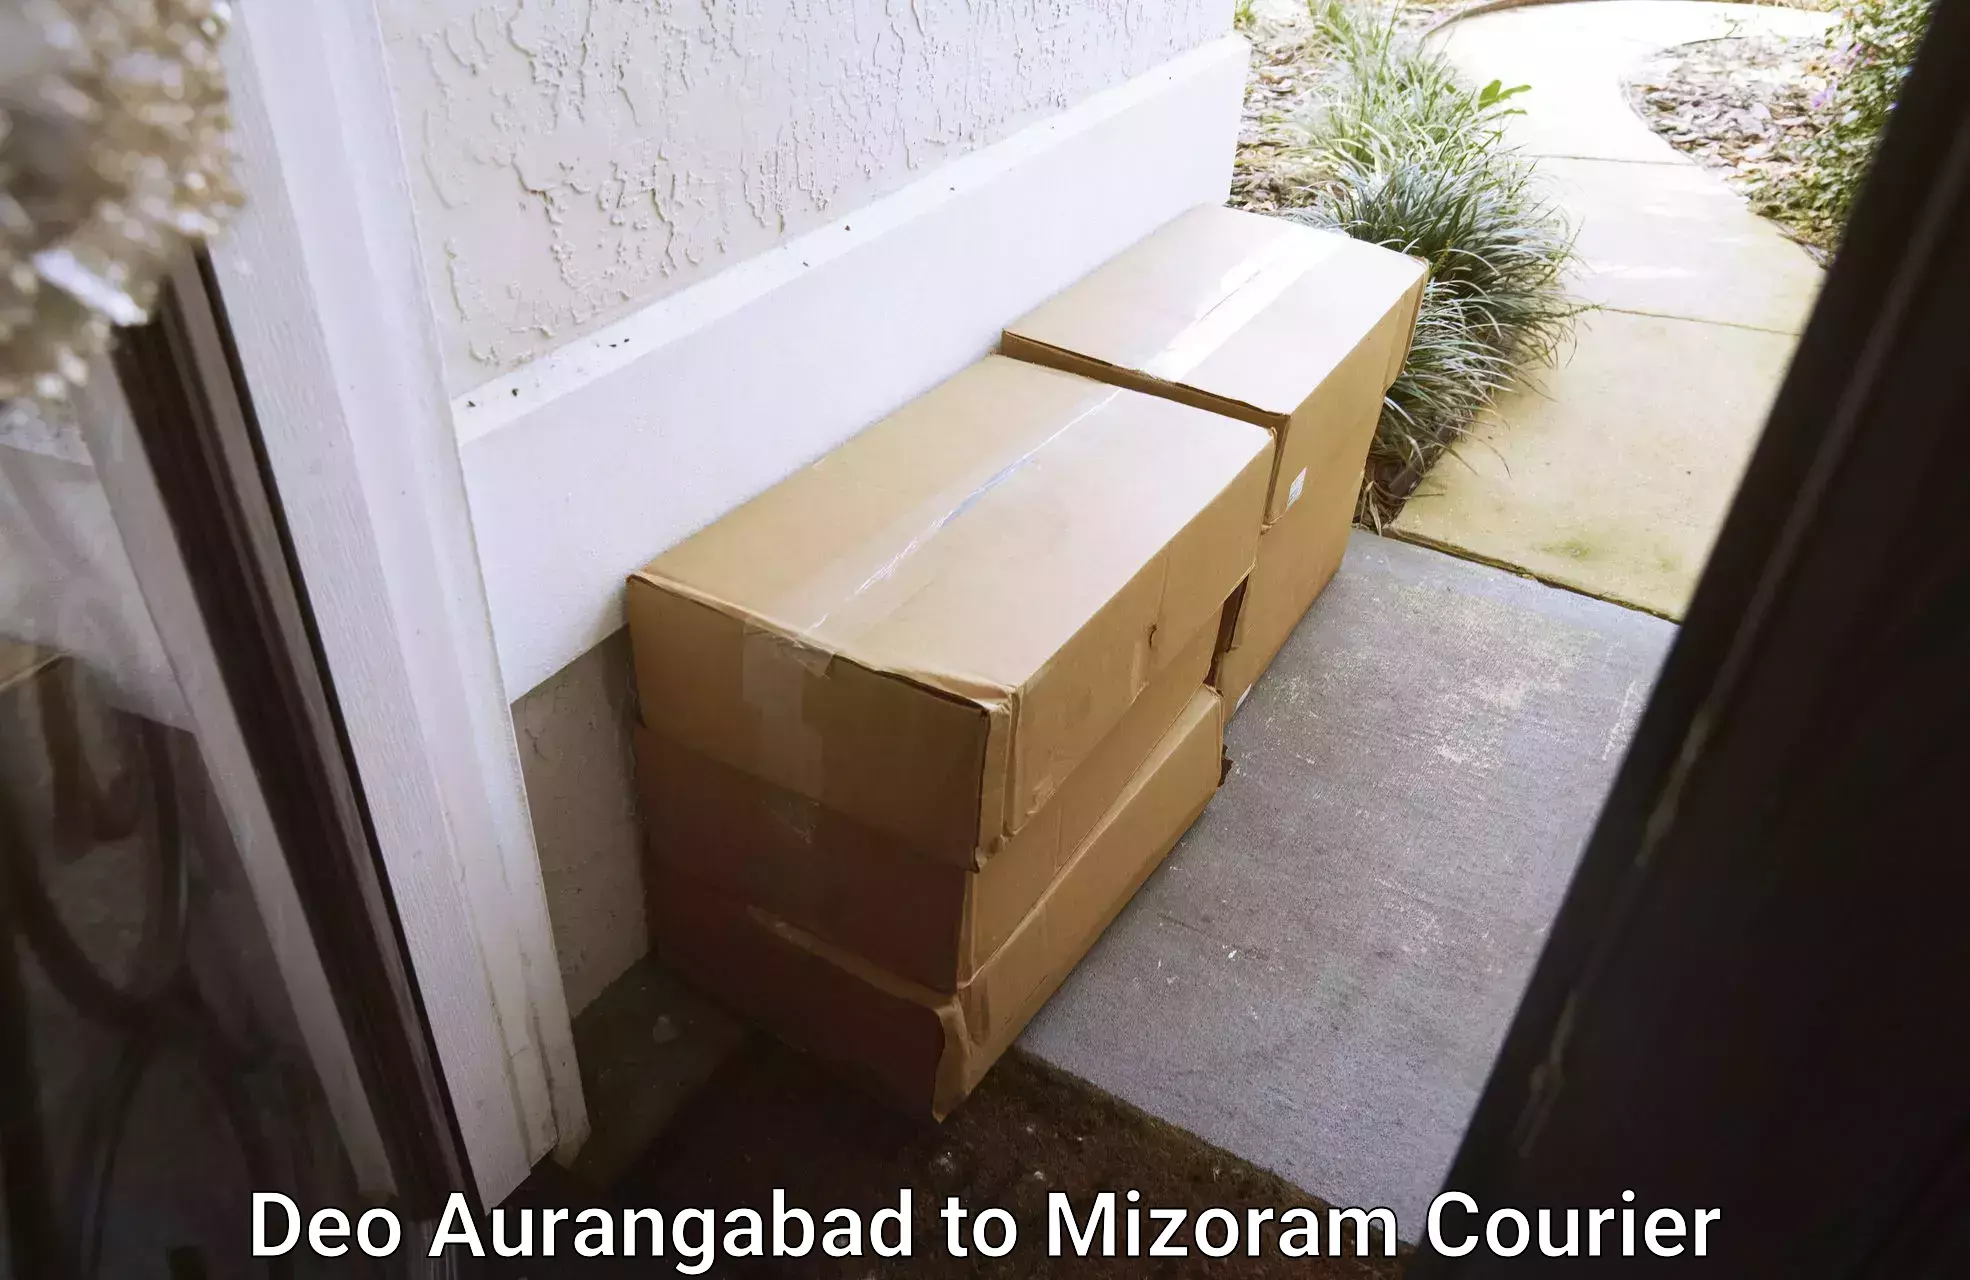 Efficient moving company Deo Aurangabad to Mizoram